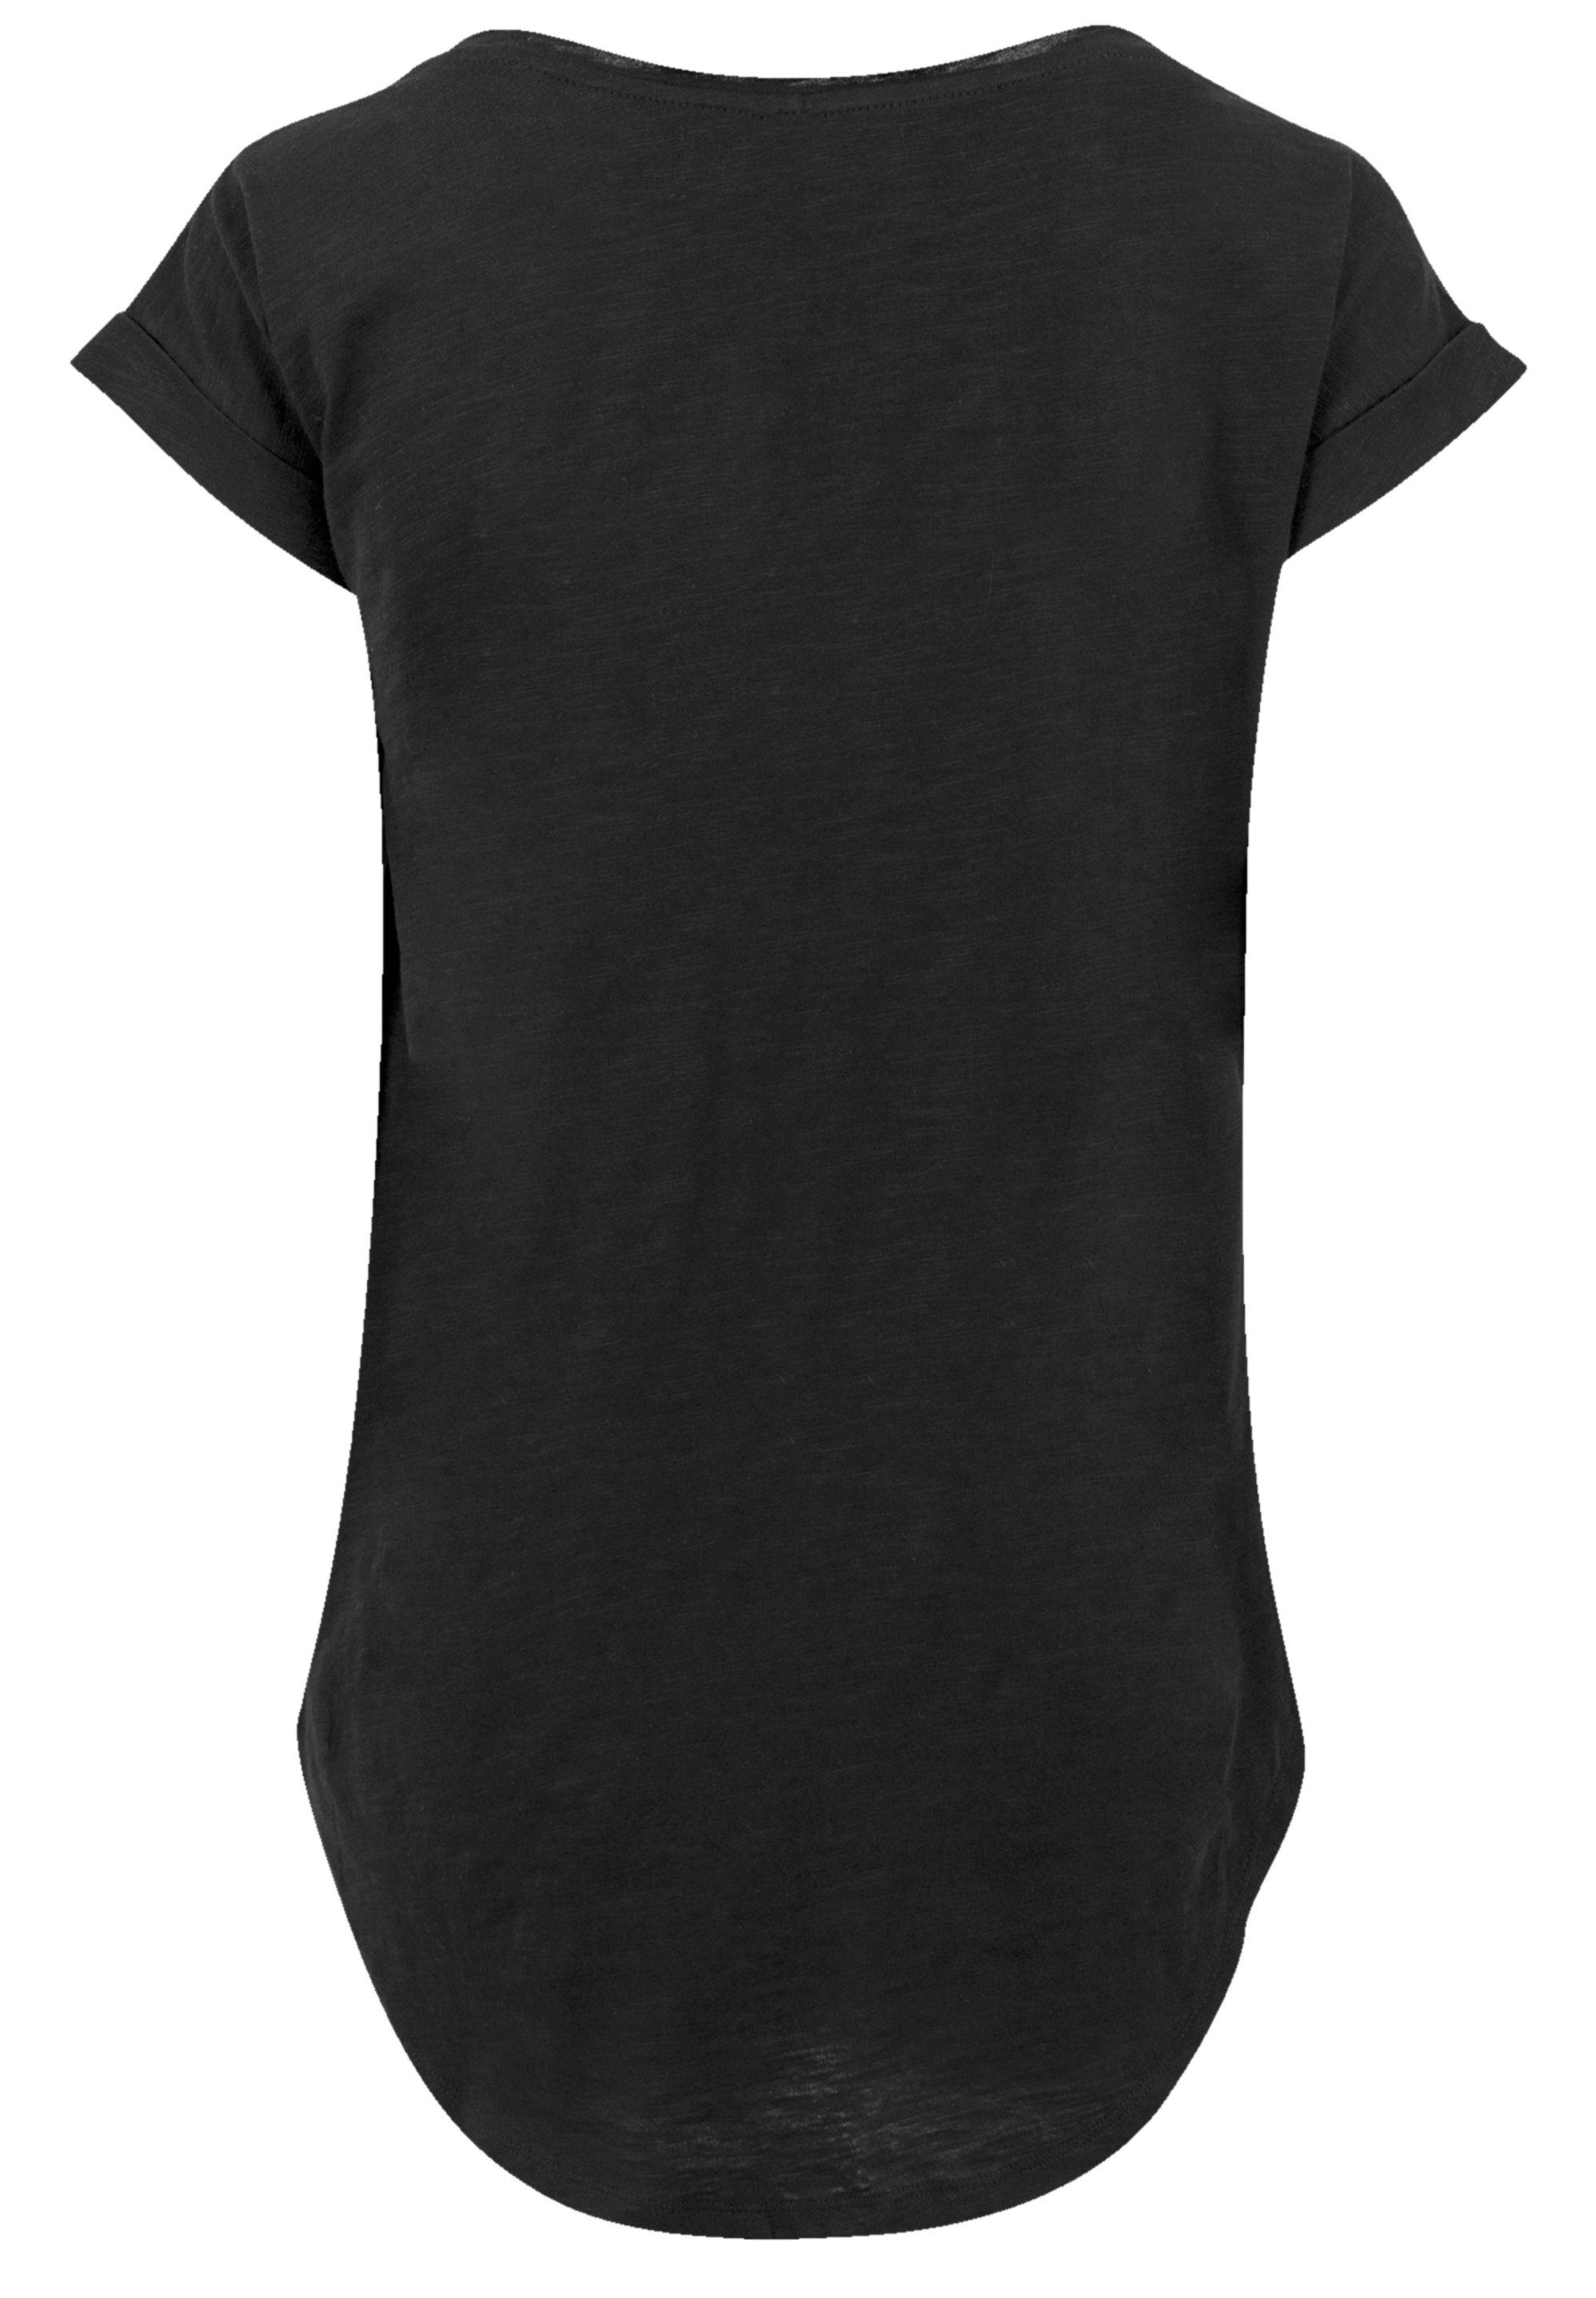 F4NT4STIC T-Shirt Disney Alice im Wunderland Time\'s Up Premium Qualität,  Hinten extra lang geschnittenes Damen T-Shirt